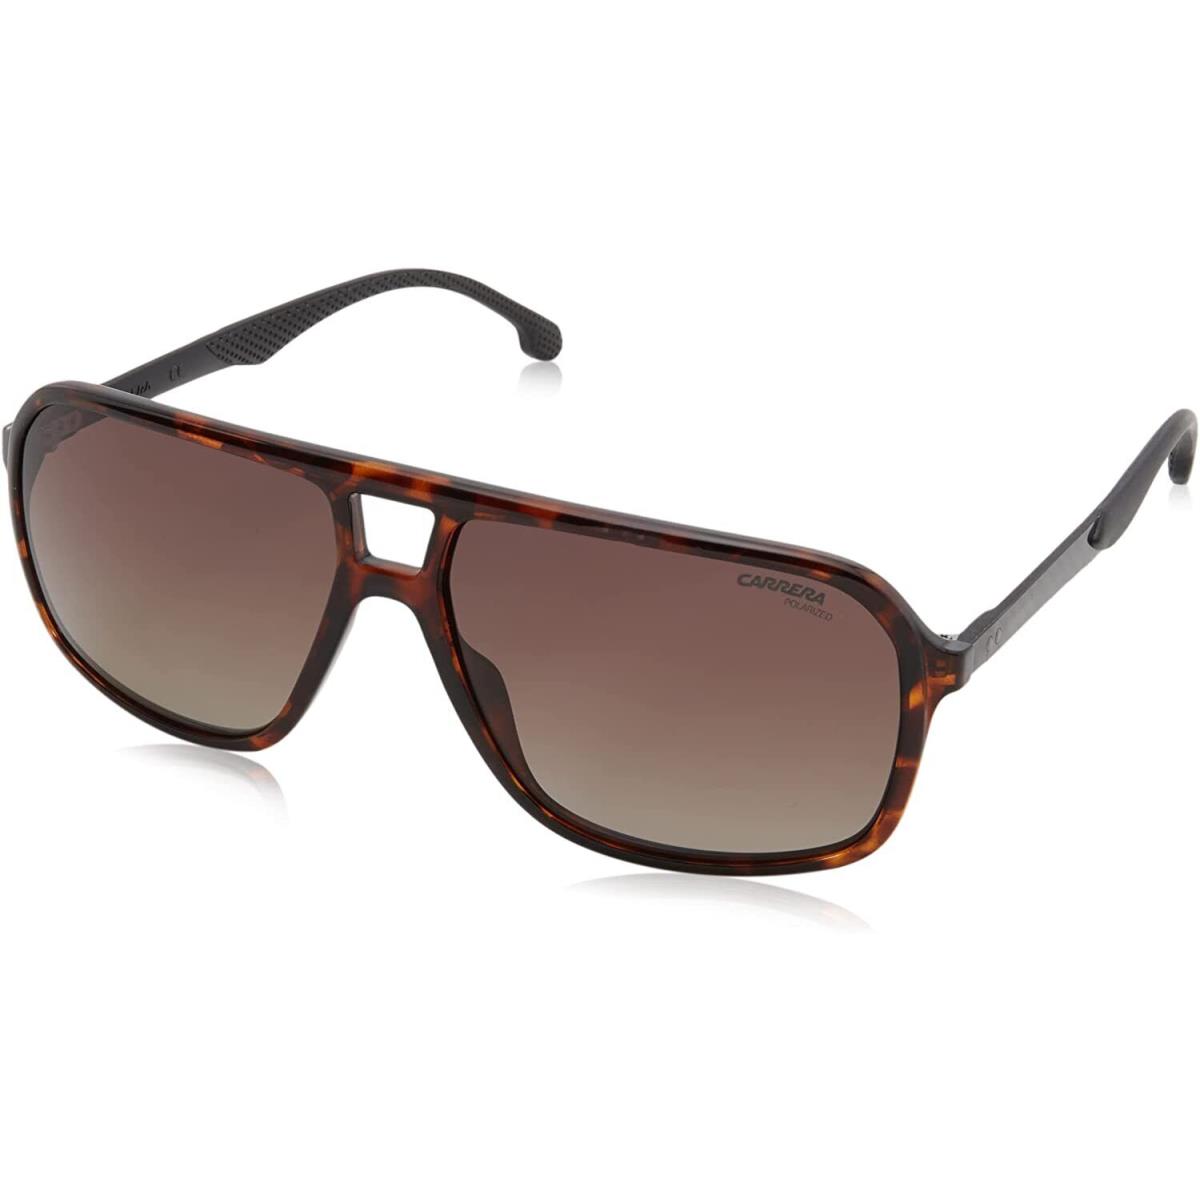 Carrera Sunglasses 8035/S 8035 0086 Havana Brown Gradient Polarized Lenses